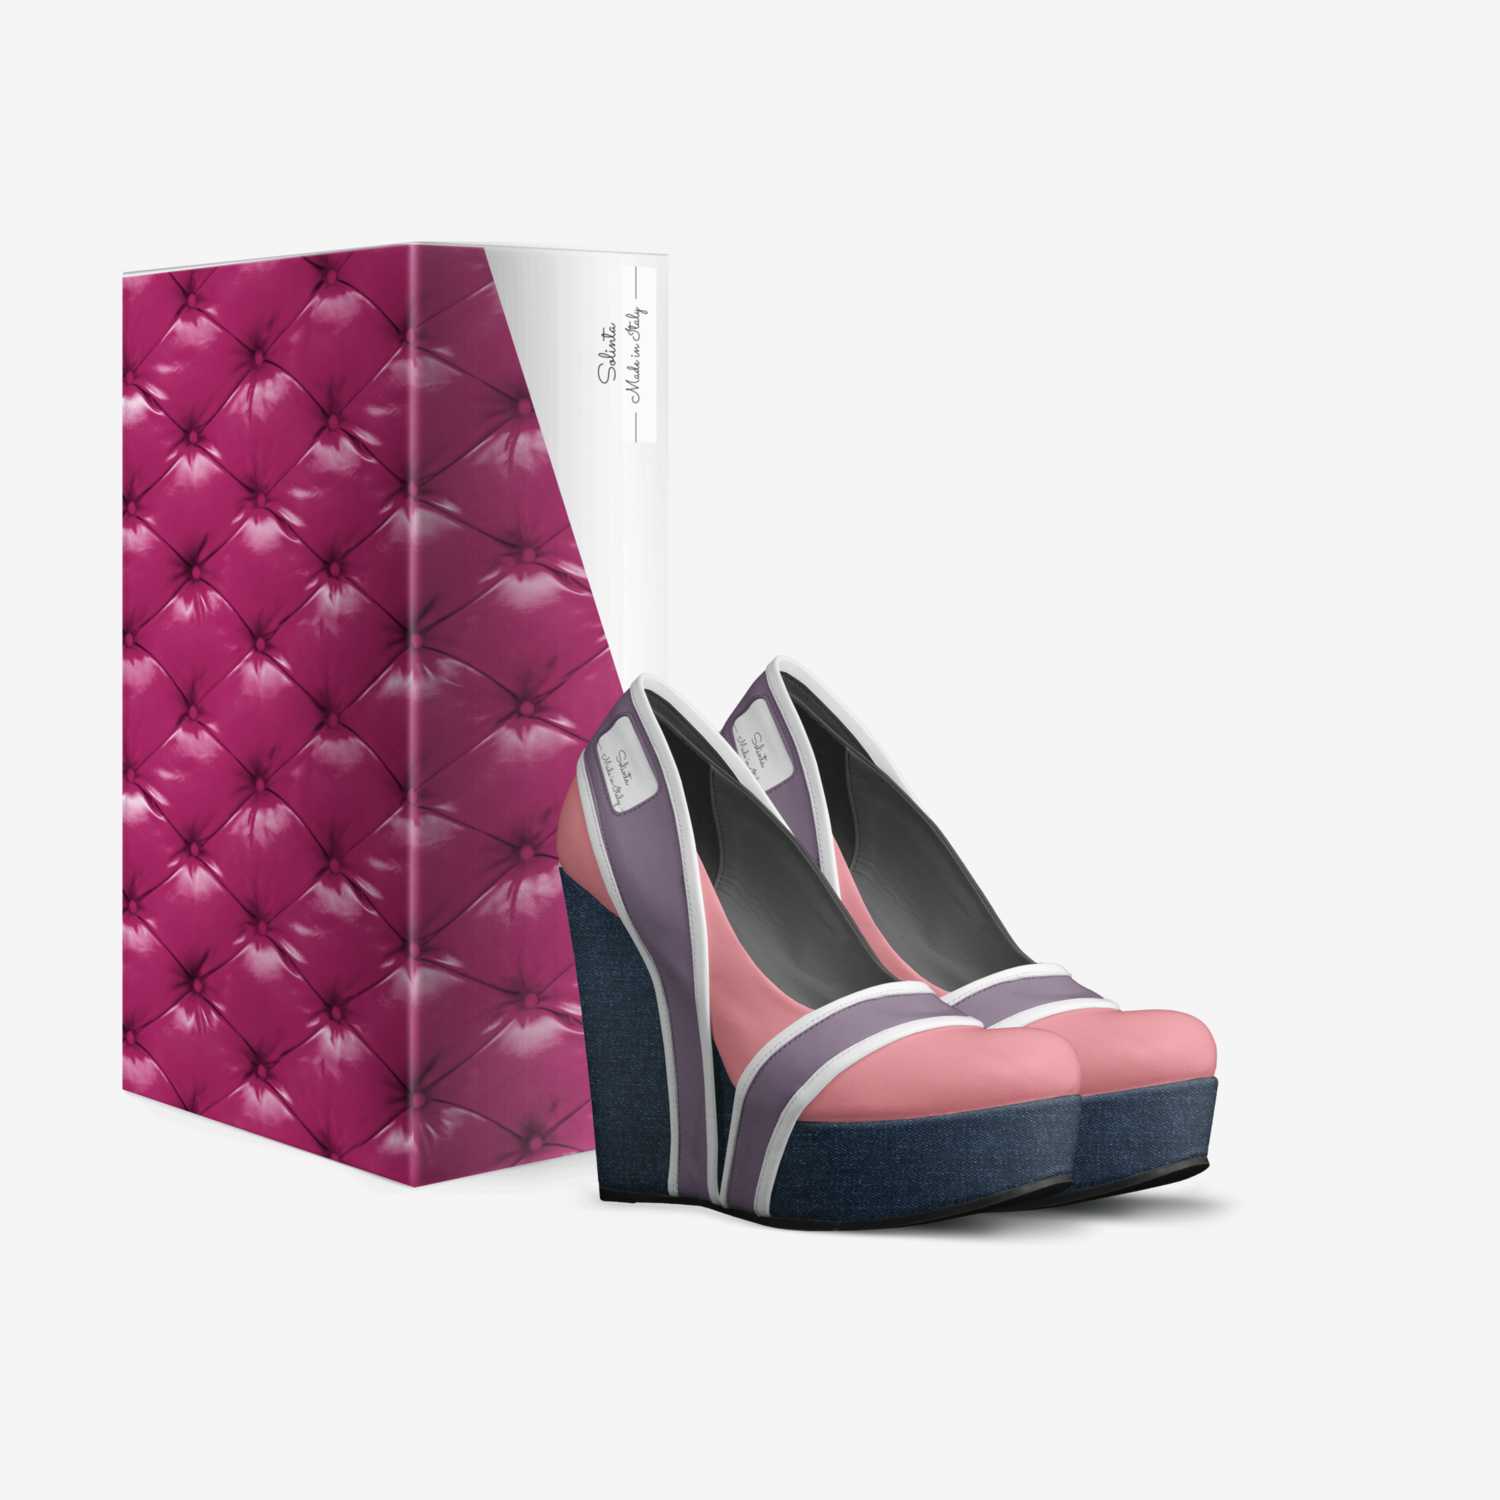 Solinta custom made in Italy shoes by John Koly | Box view